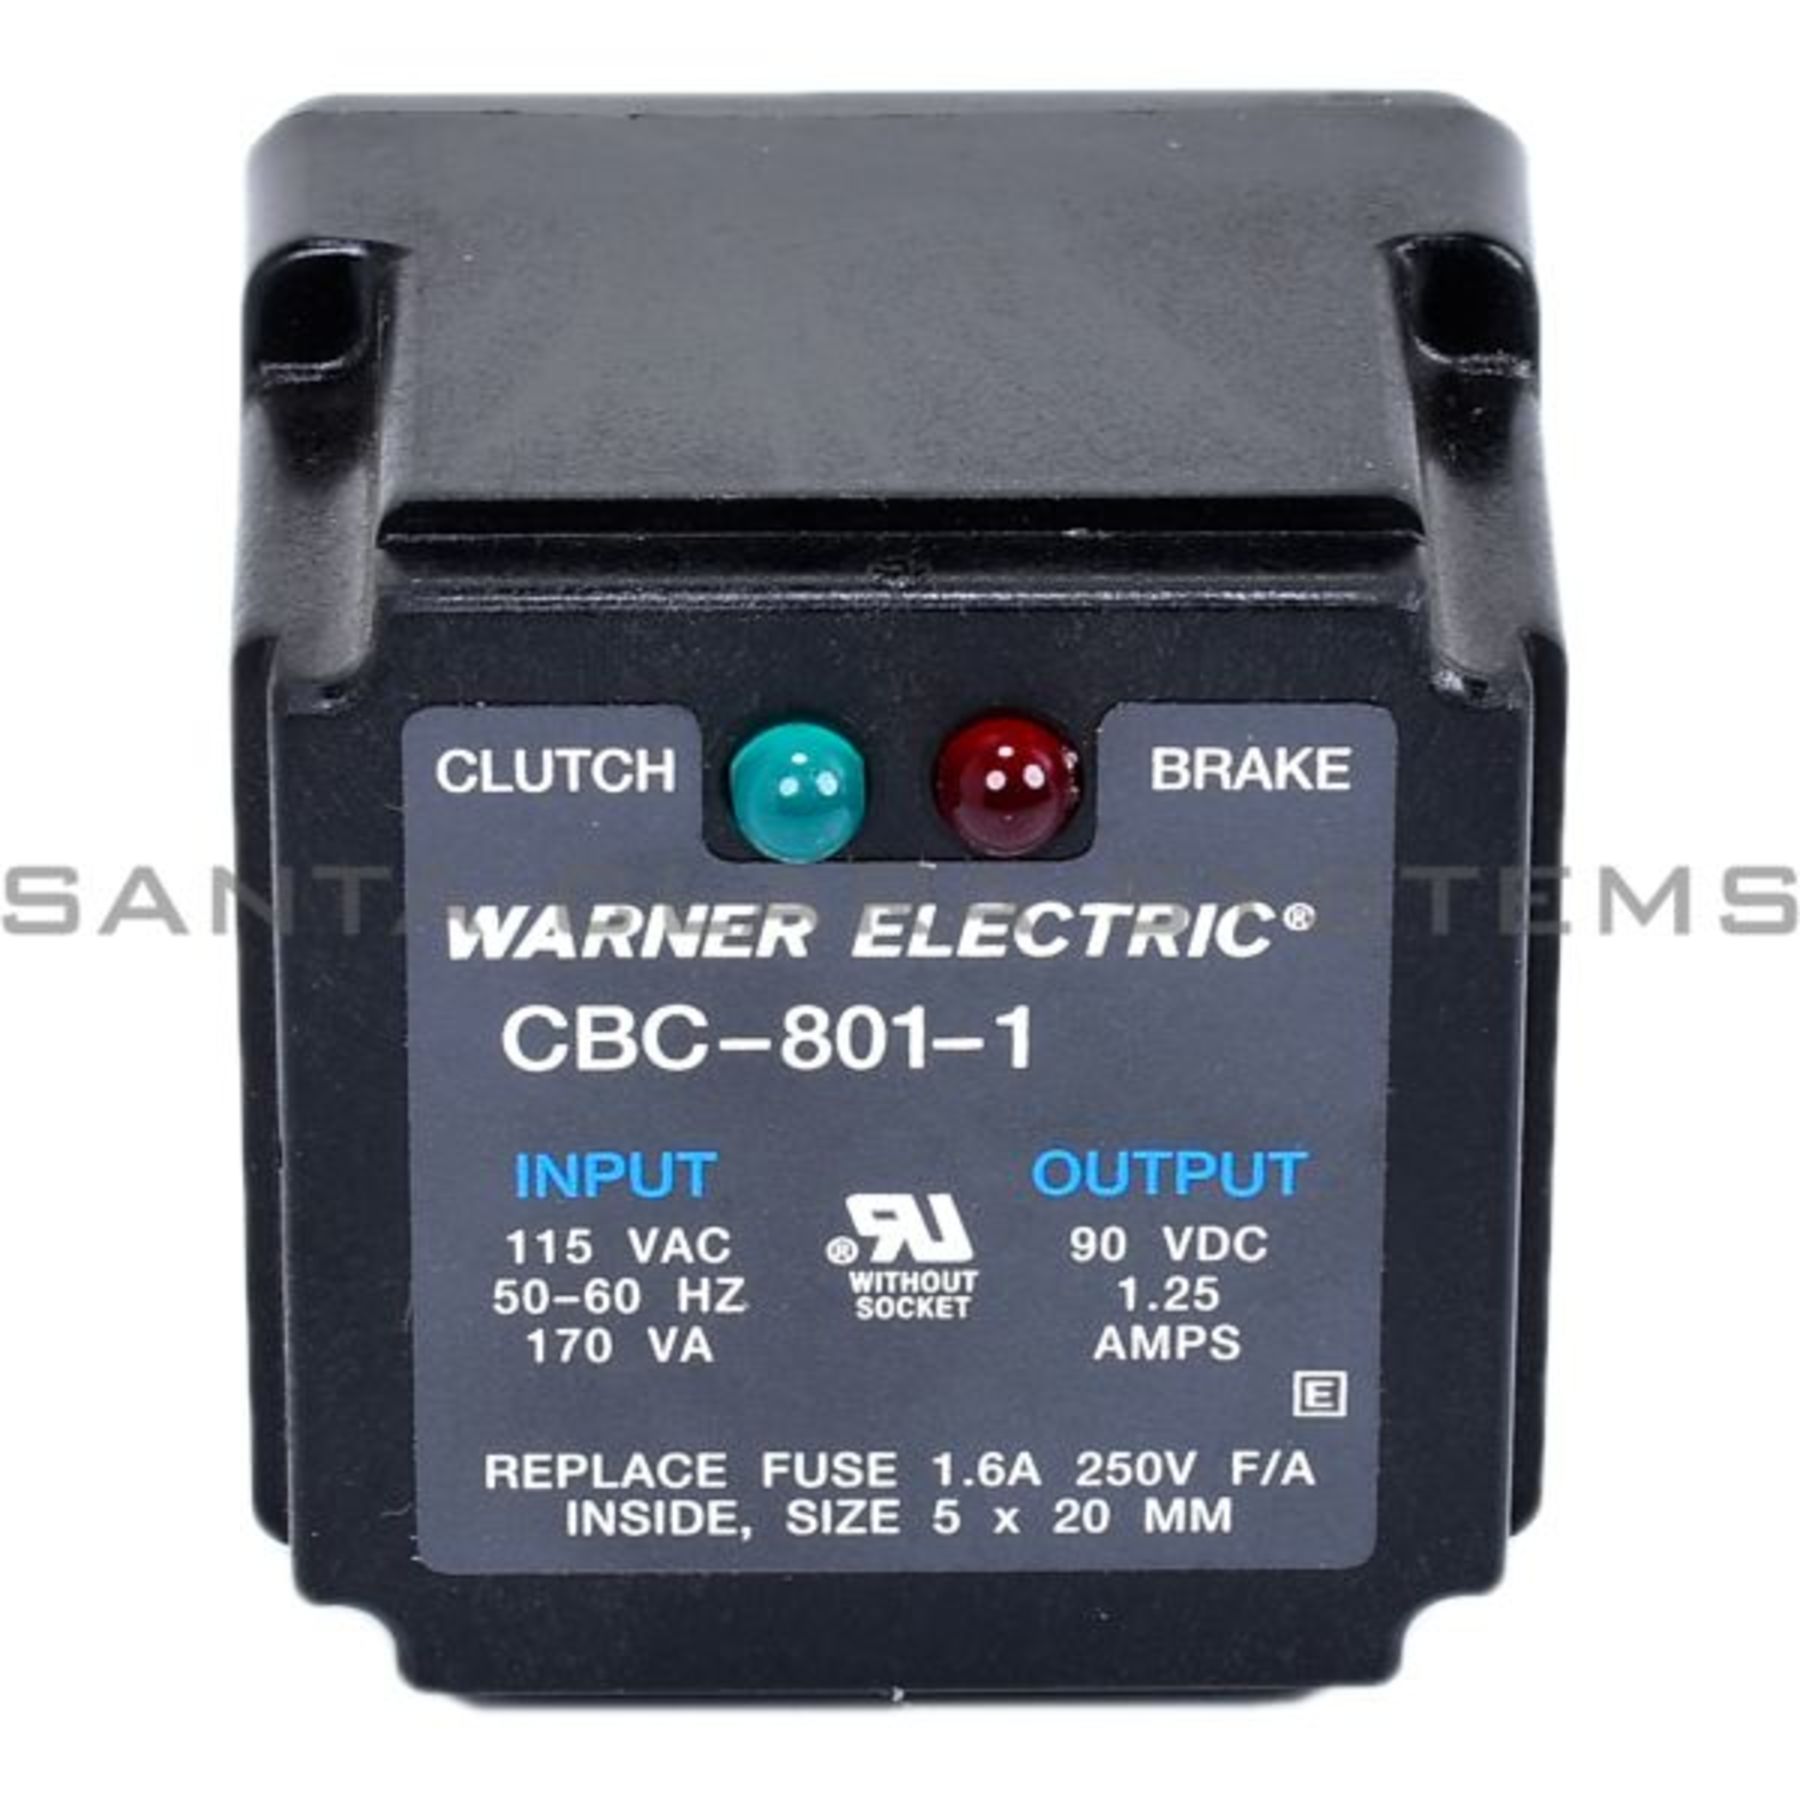 Warner Electric Clutch/Brake Control CBVC-801-1 Used